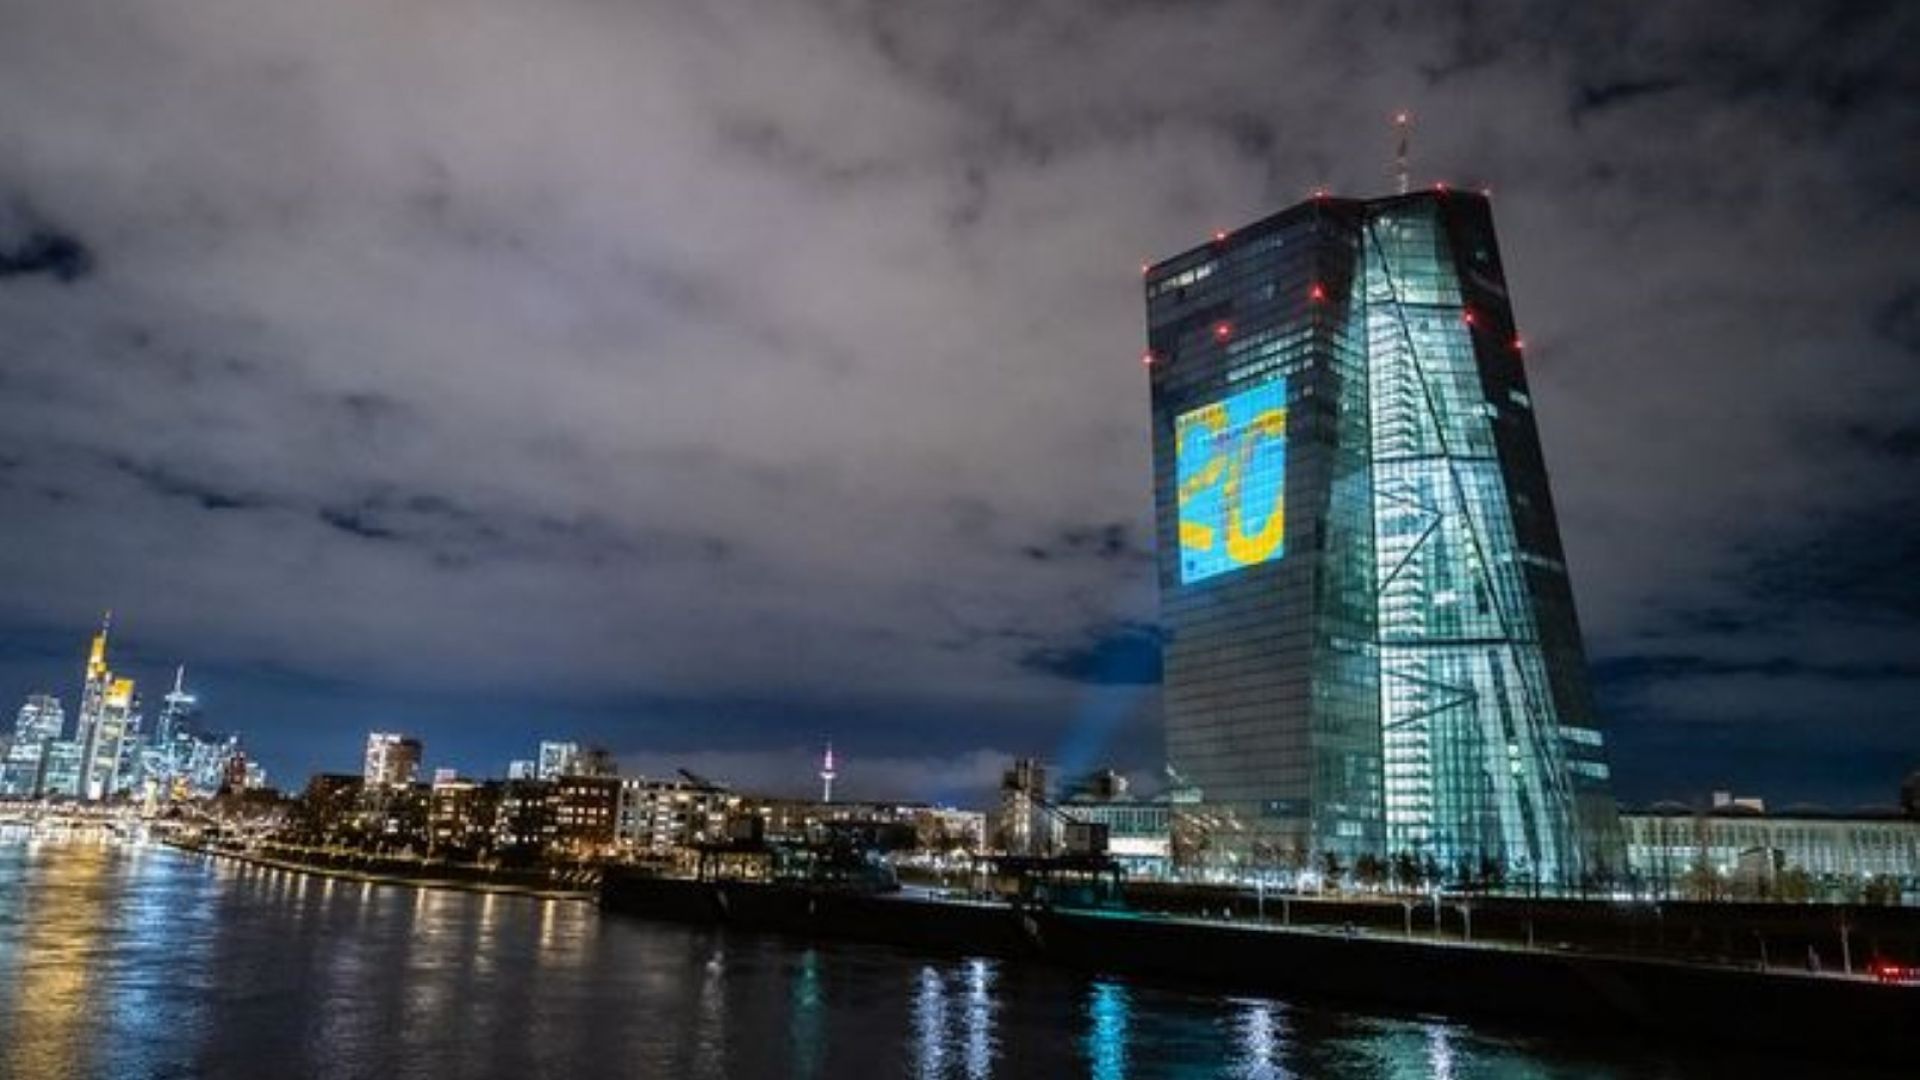 ЕЦБ обмисля по-нататъшно вдигане на водещите лихви